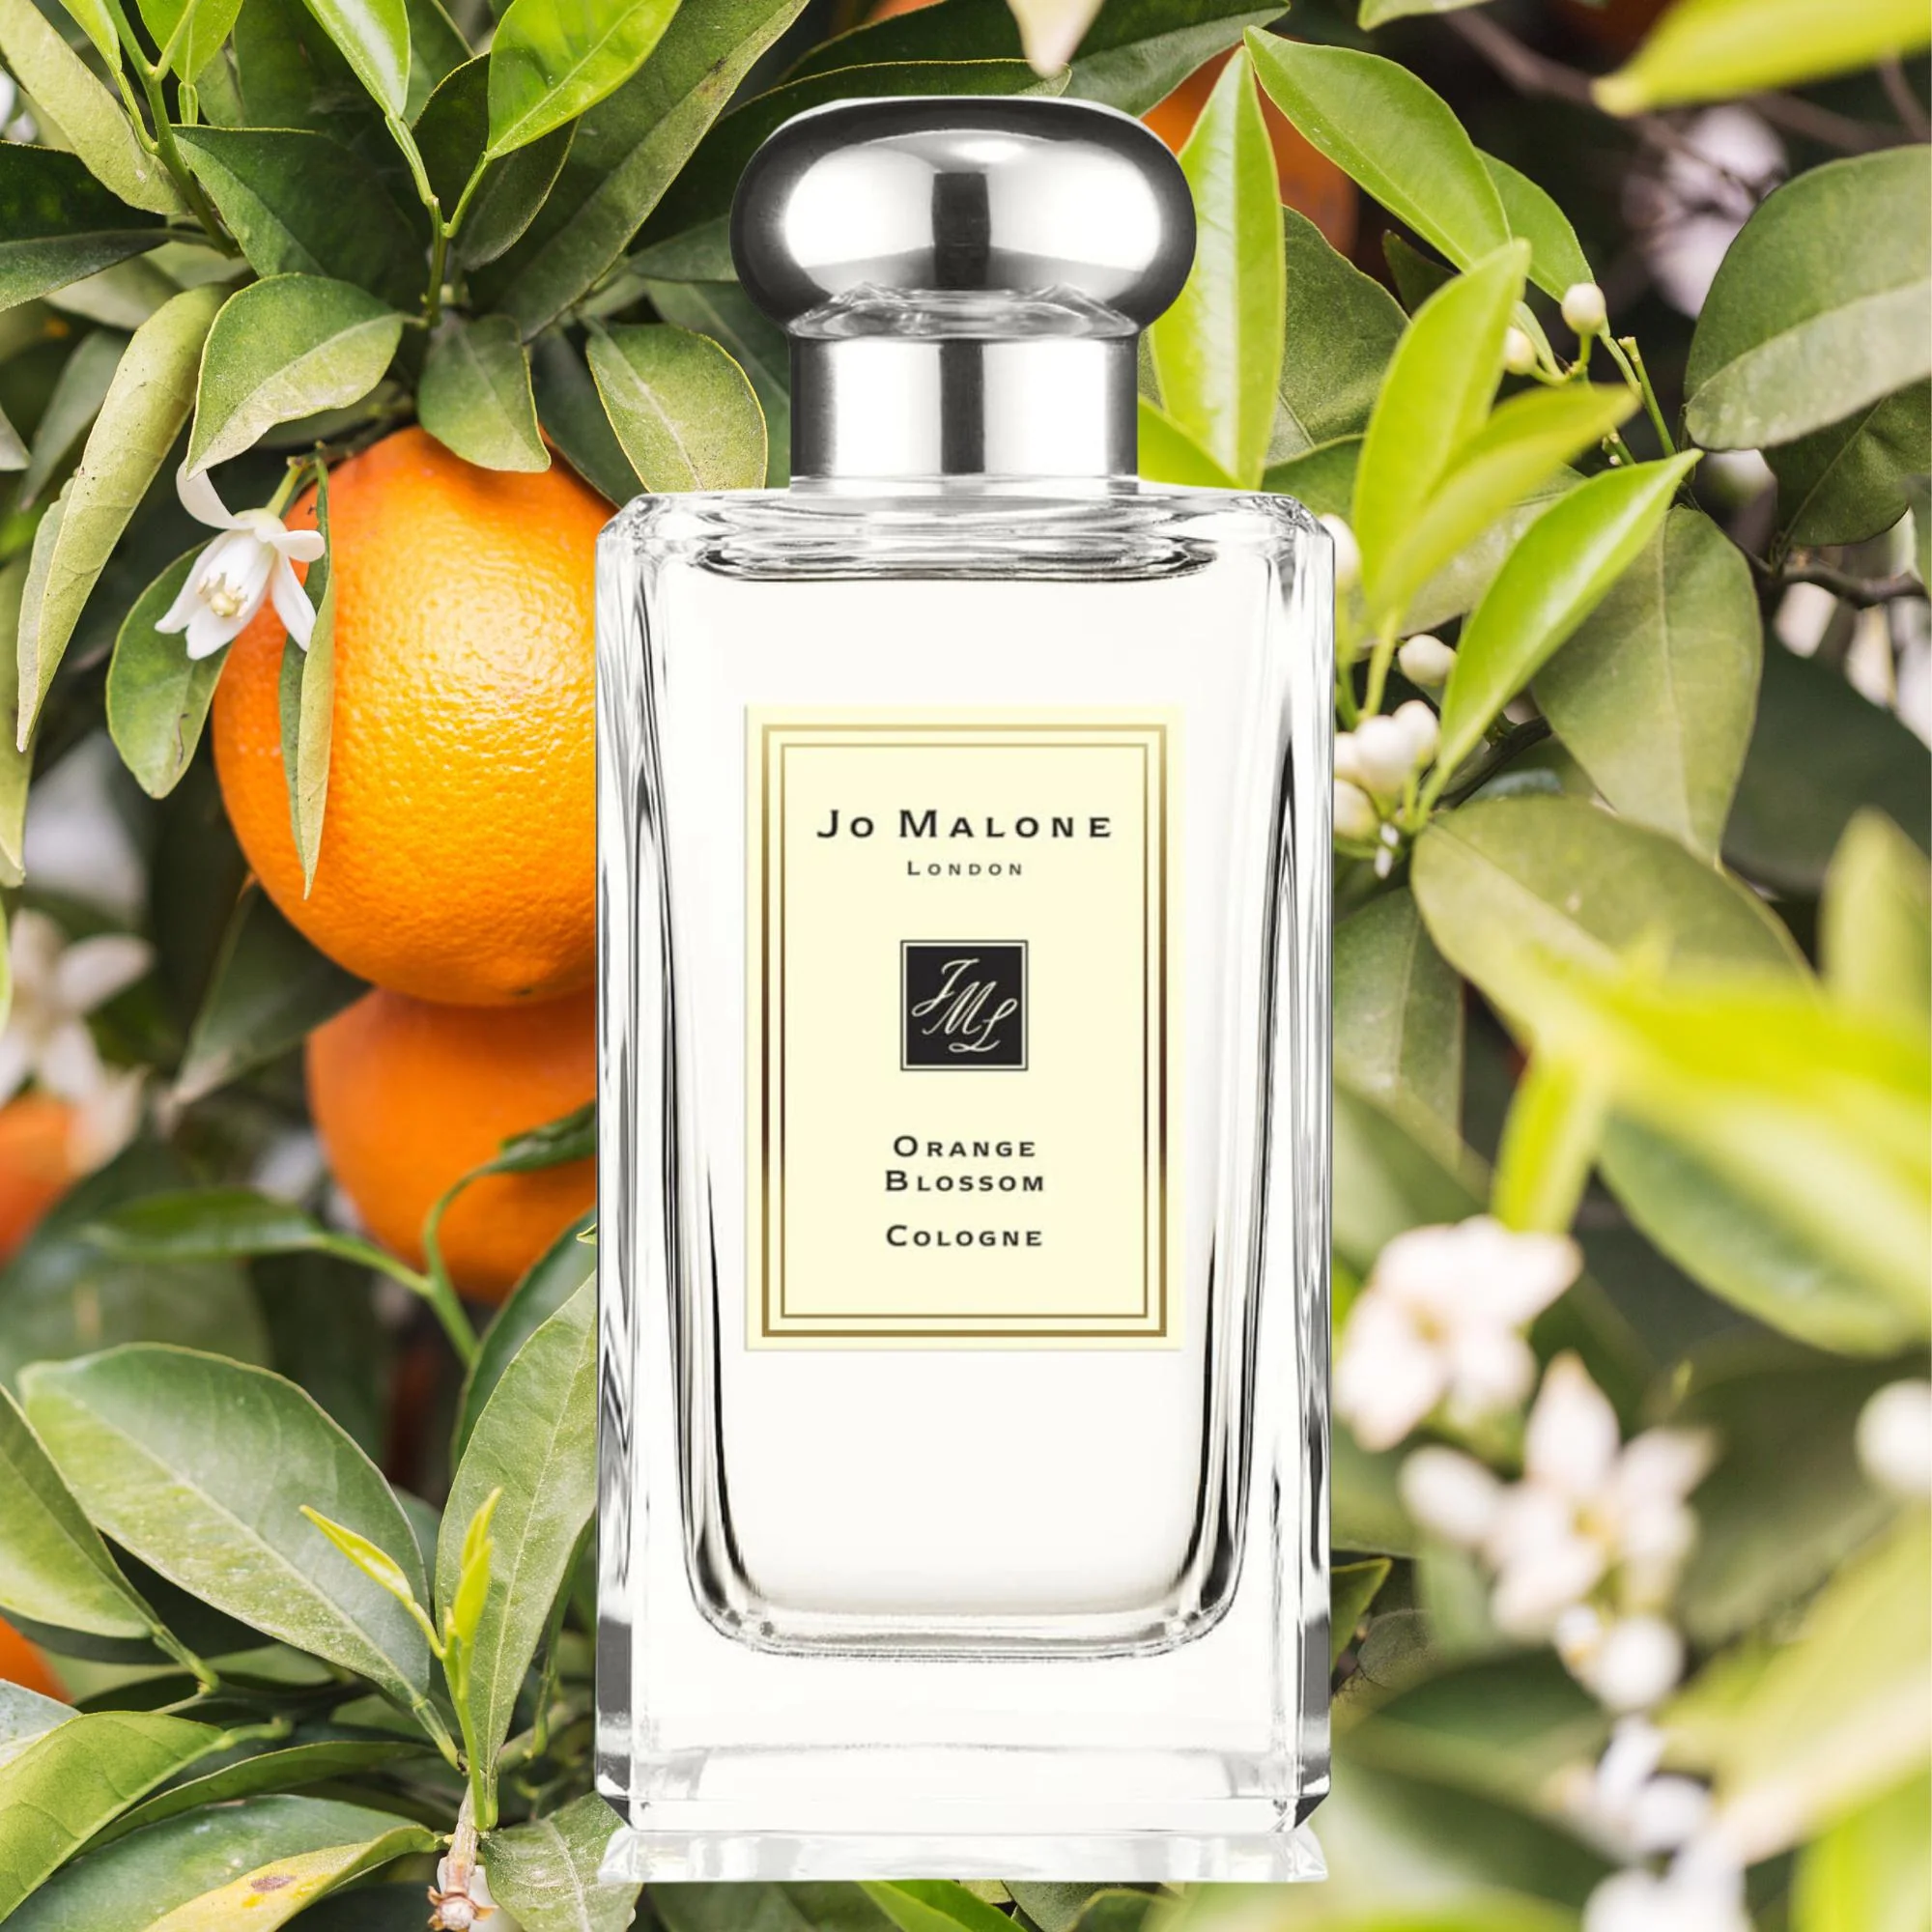 Botella de perfume Orange Blossom de Jo Malone con notas de flor de clementina, azahar y lirio de agua, ideal como perfume para novia.